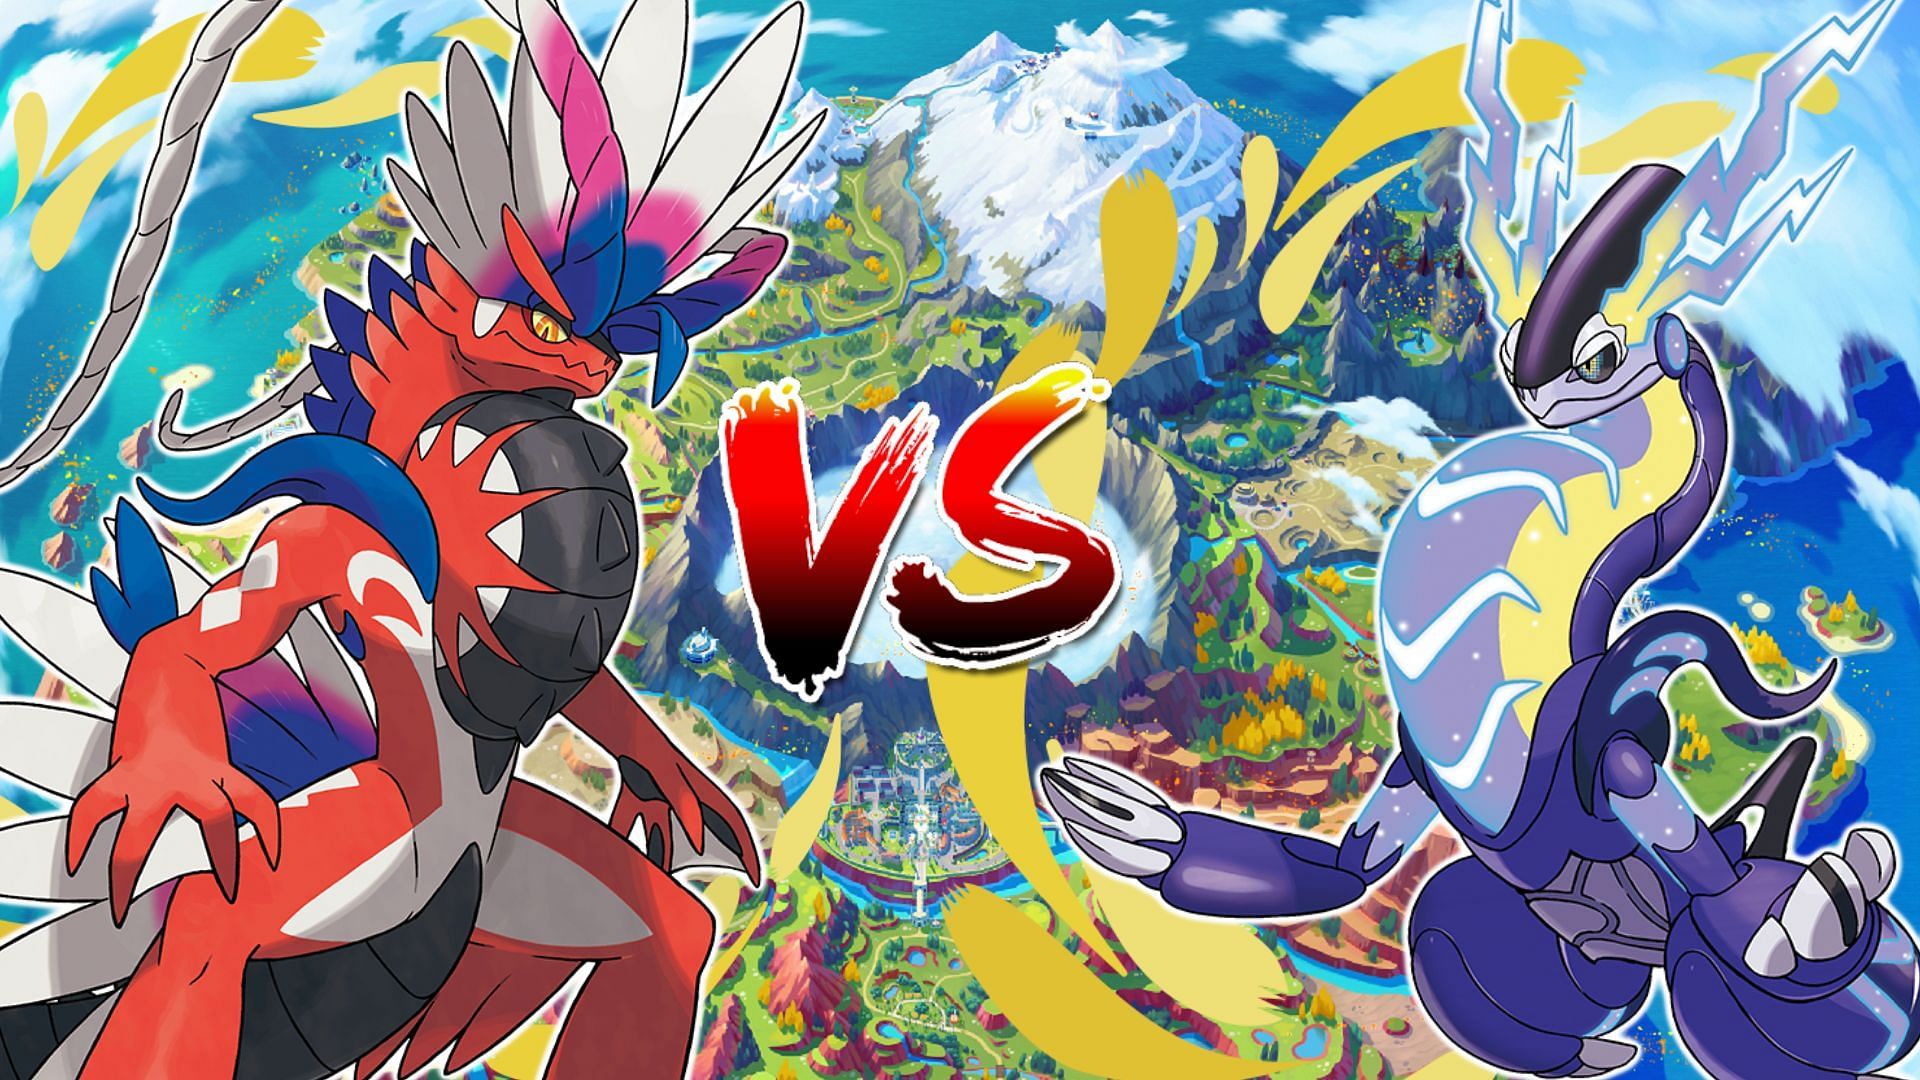 KORAIDON vs MIRAIDON  Legendary Pokémon Battle [Pokémon Scarlet